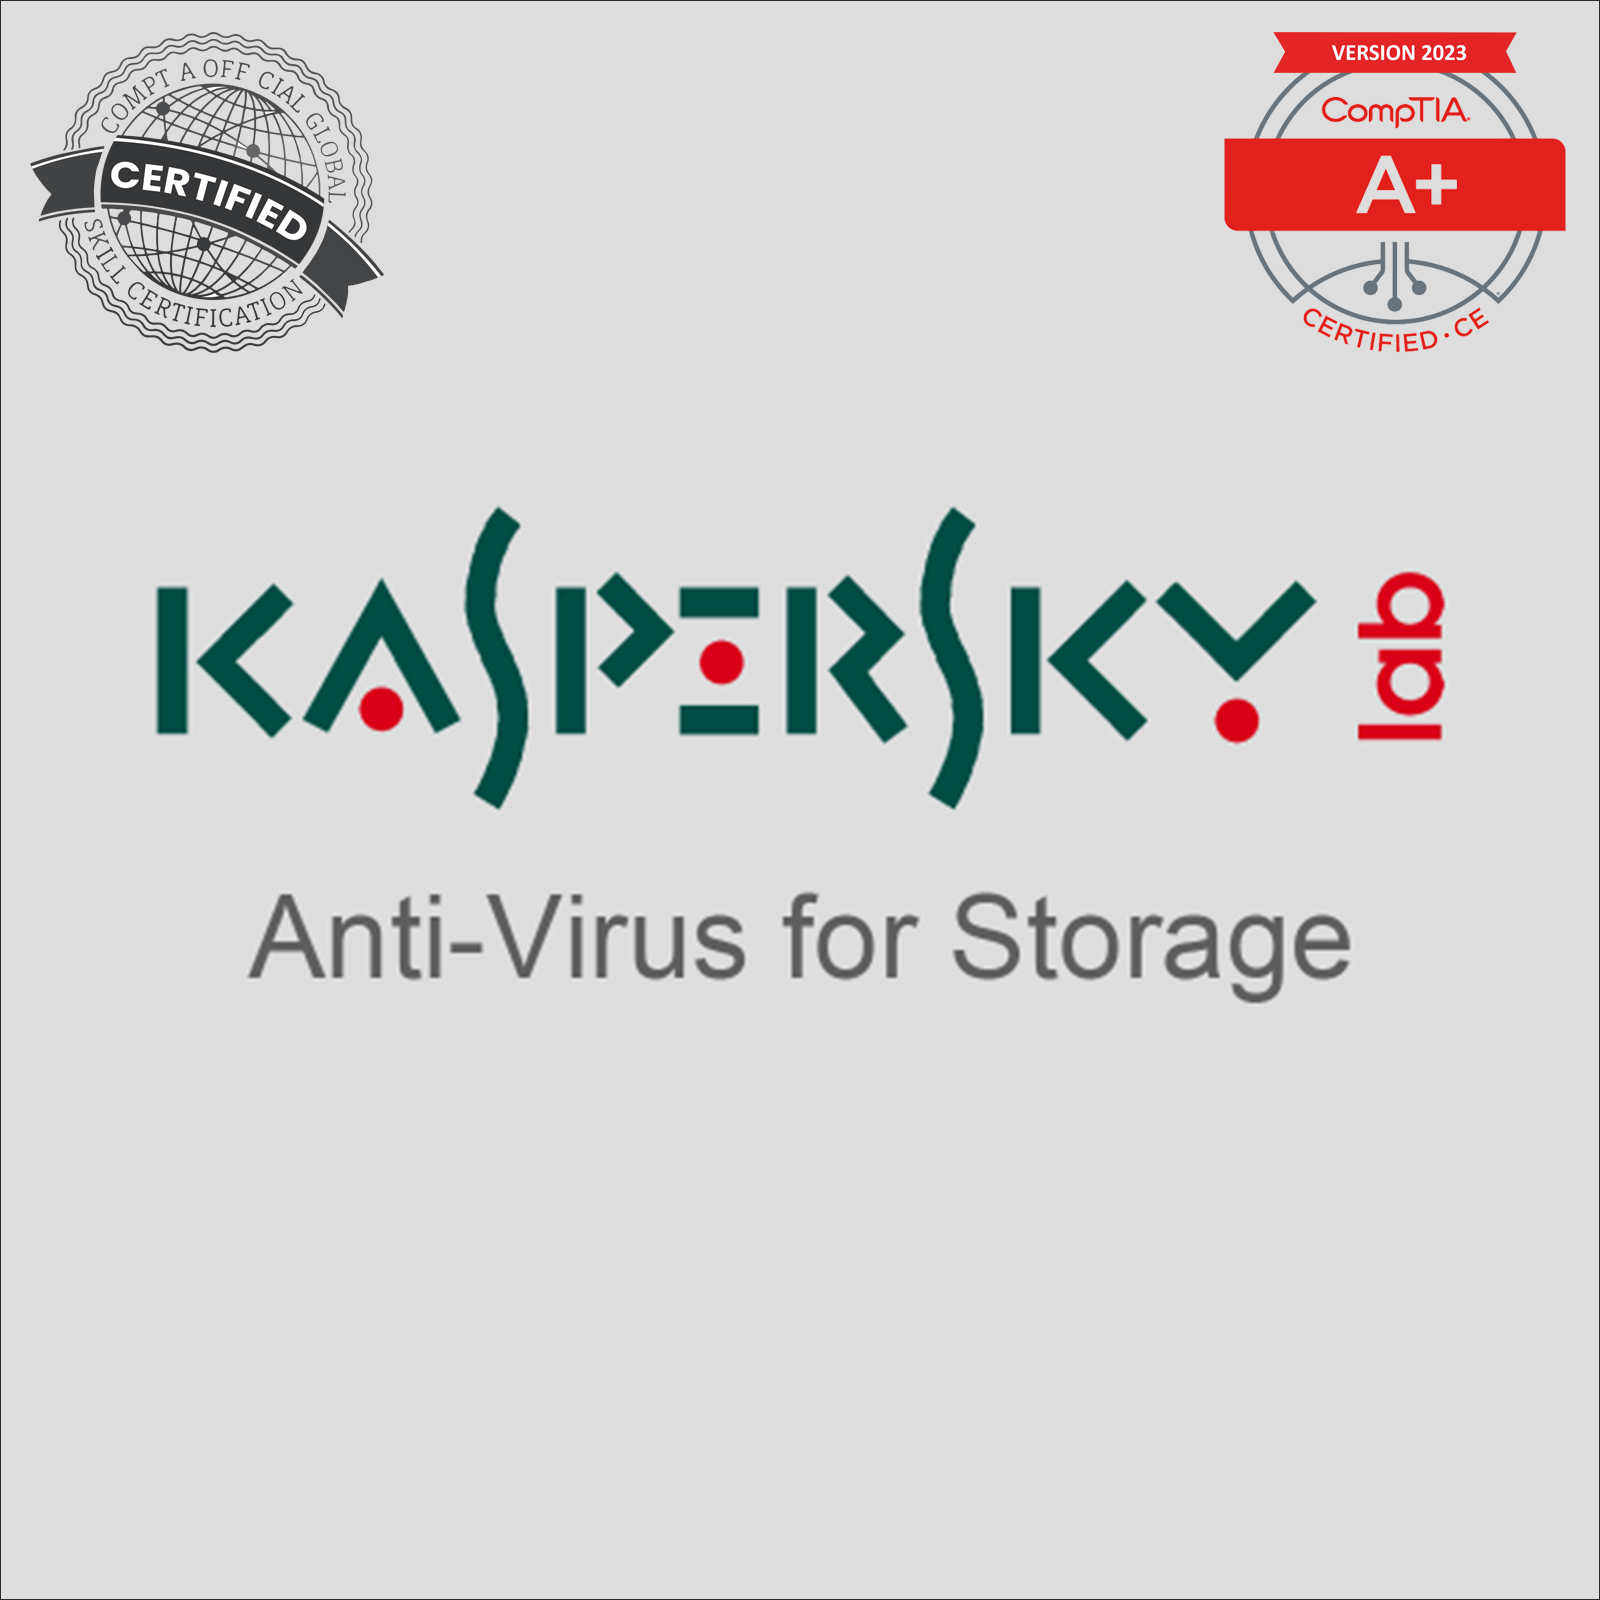 Kaspersky Anti-Virus for Storage - EDU - Renewal - 2-Year / 100-149 Seats (Band R)